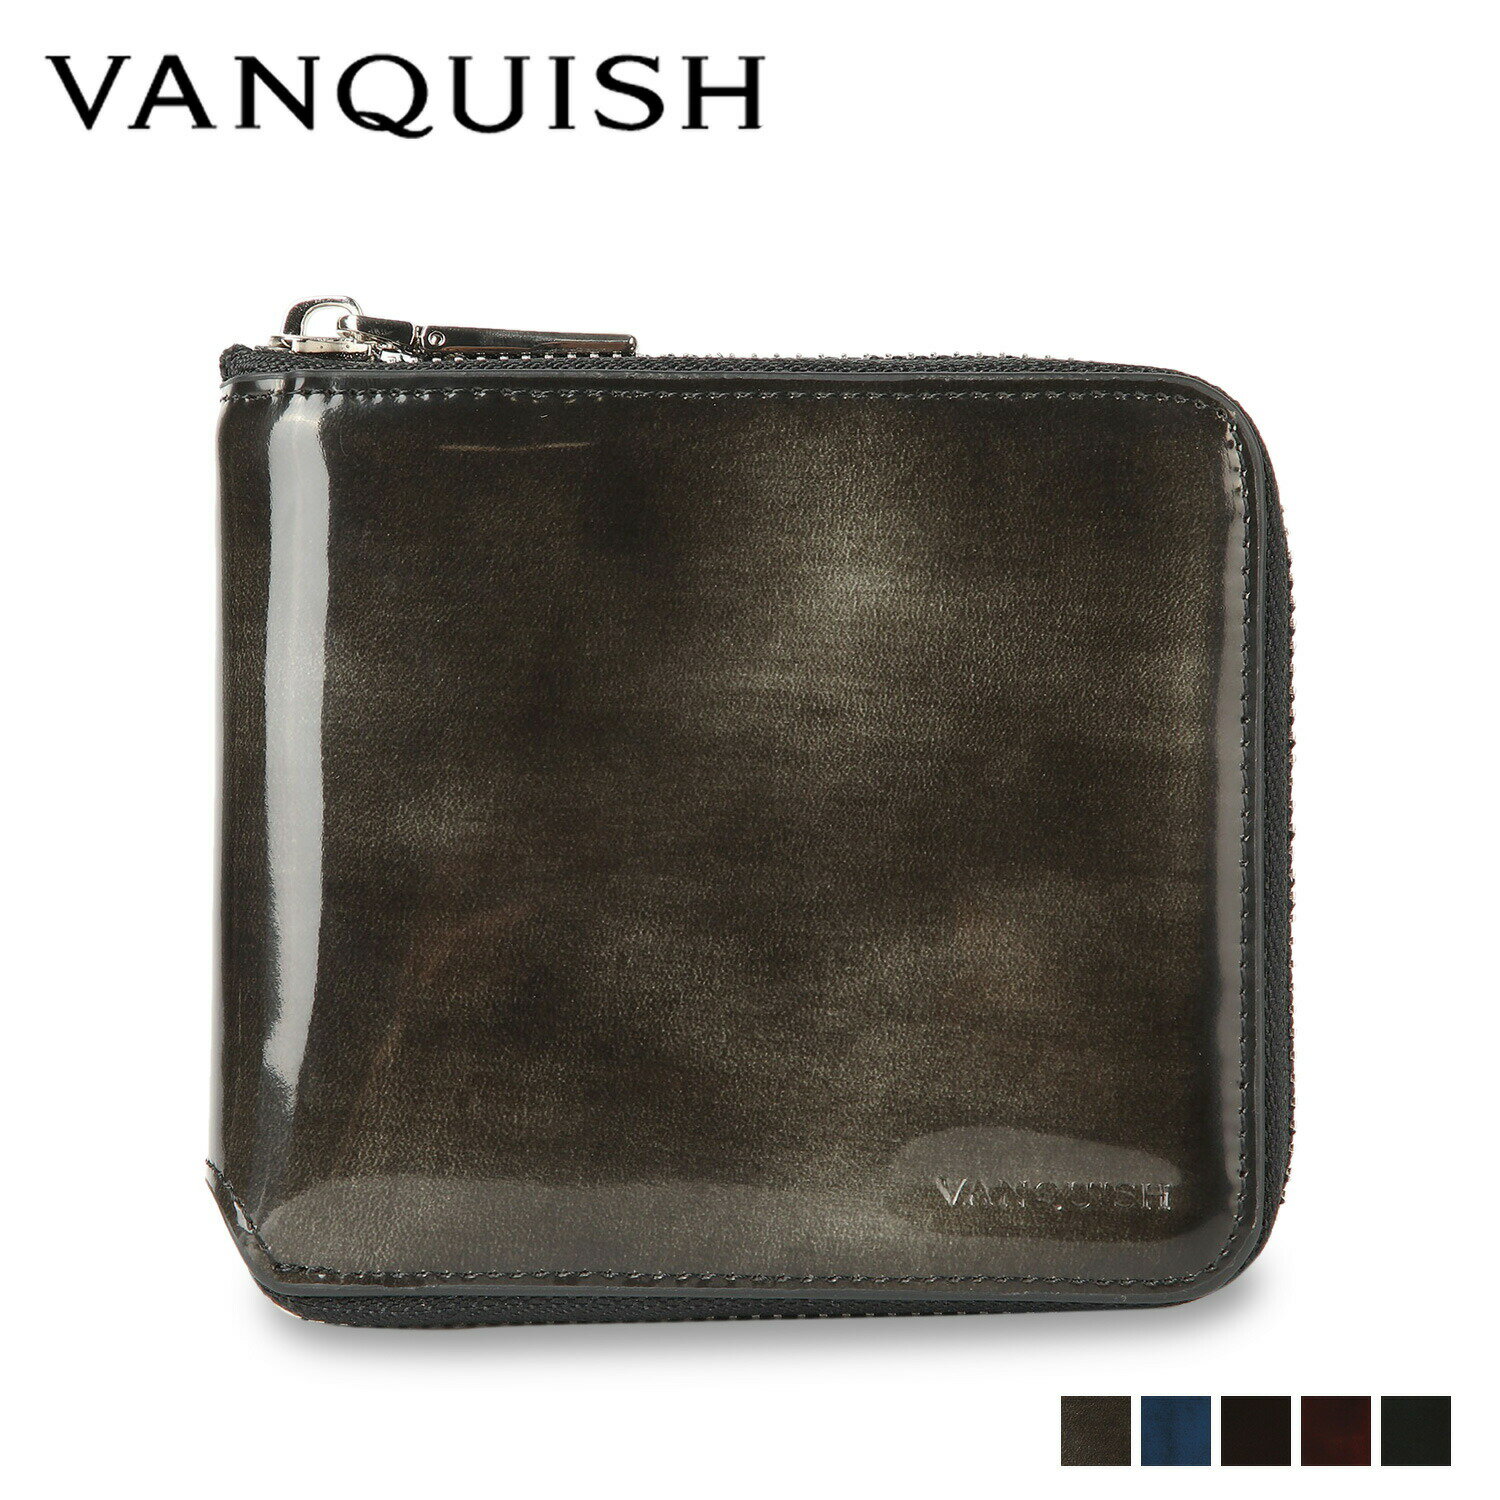 VANQUISH WALLET ヴァンキッシュ 二つ折り財布 メンズ 本革 ラウンドファスナー グレー ネイビー ブラウン ワイン グリーン VQM-43180